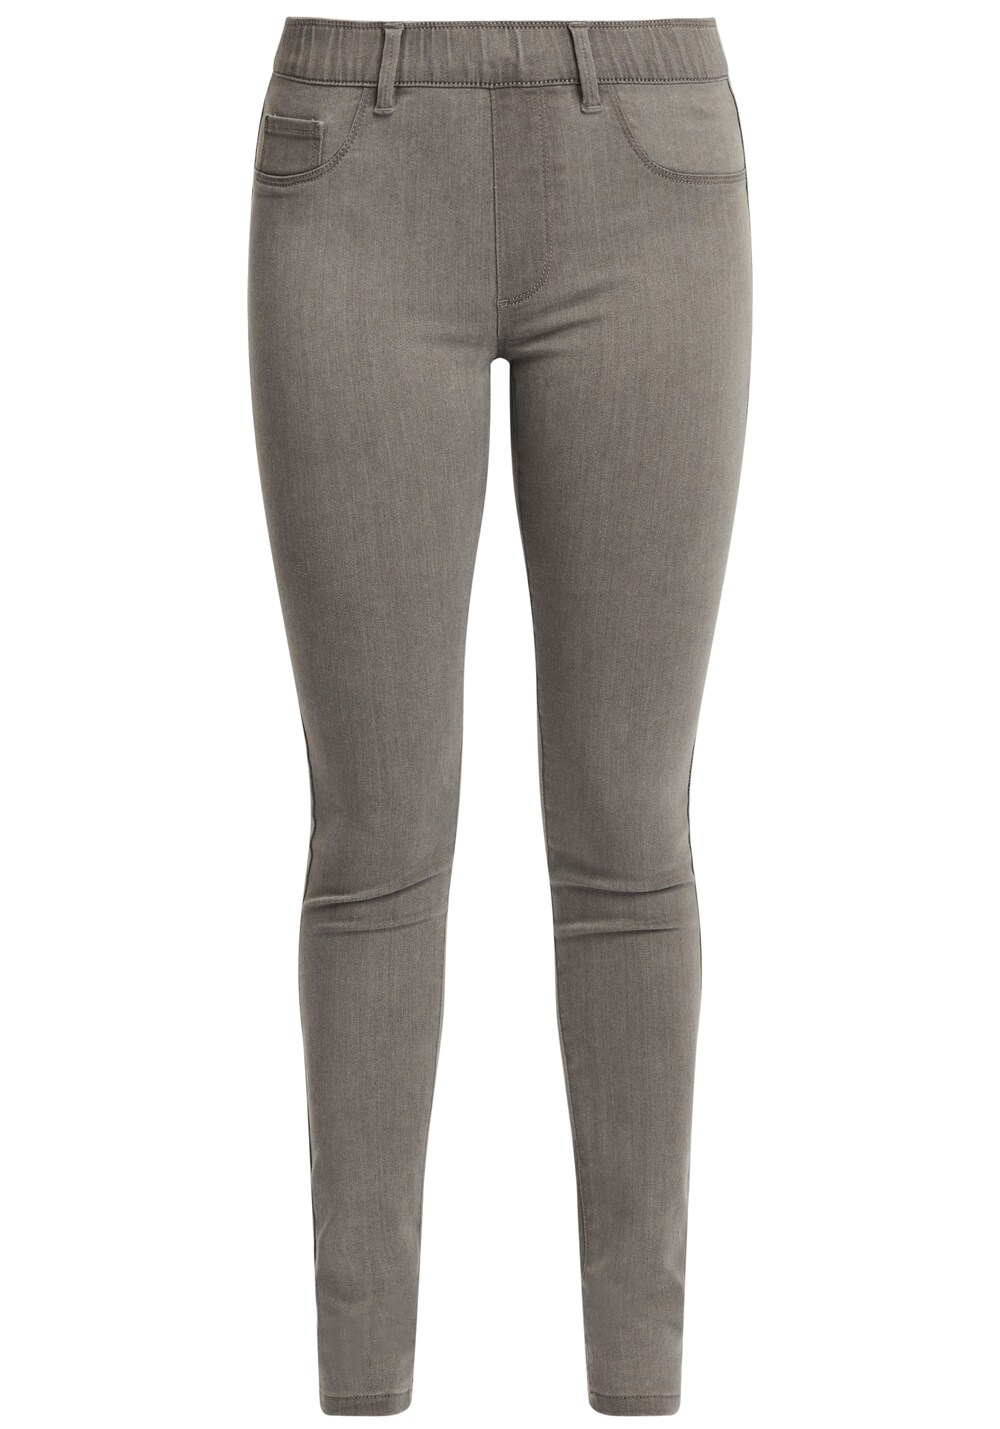 Узкие джинсы Oxmo Gesine, серый/светло-серый/пестрый серый